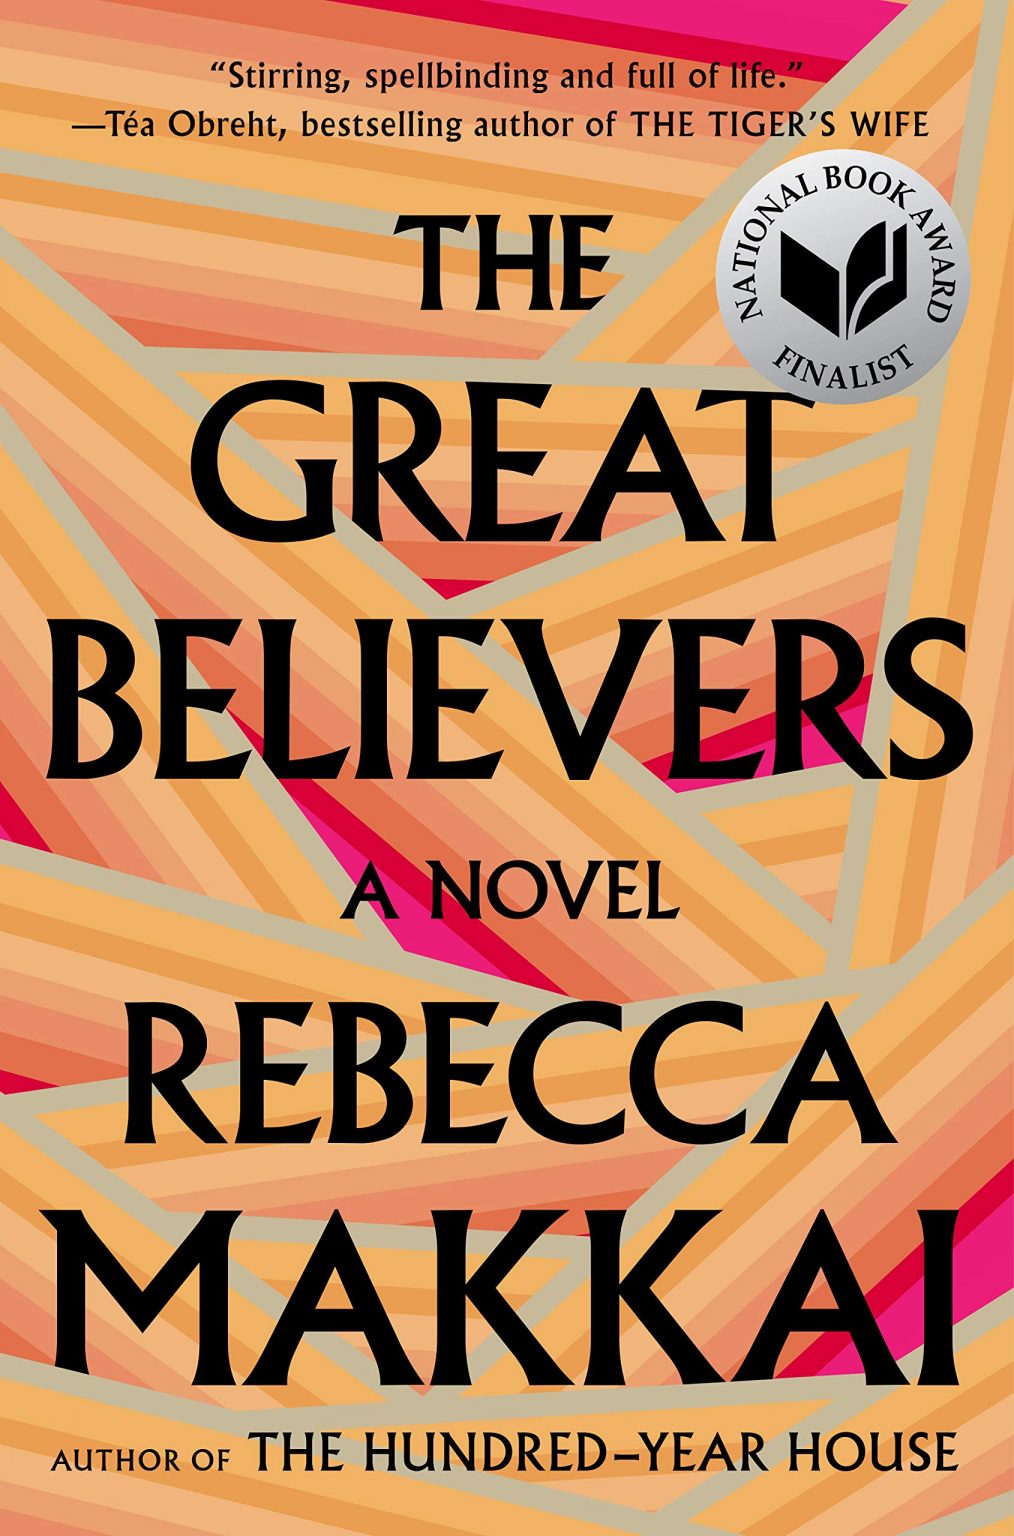 The Great Believers Rebecca Makkai 1014x1536 